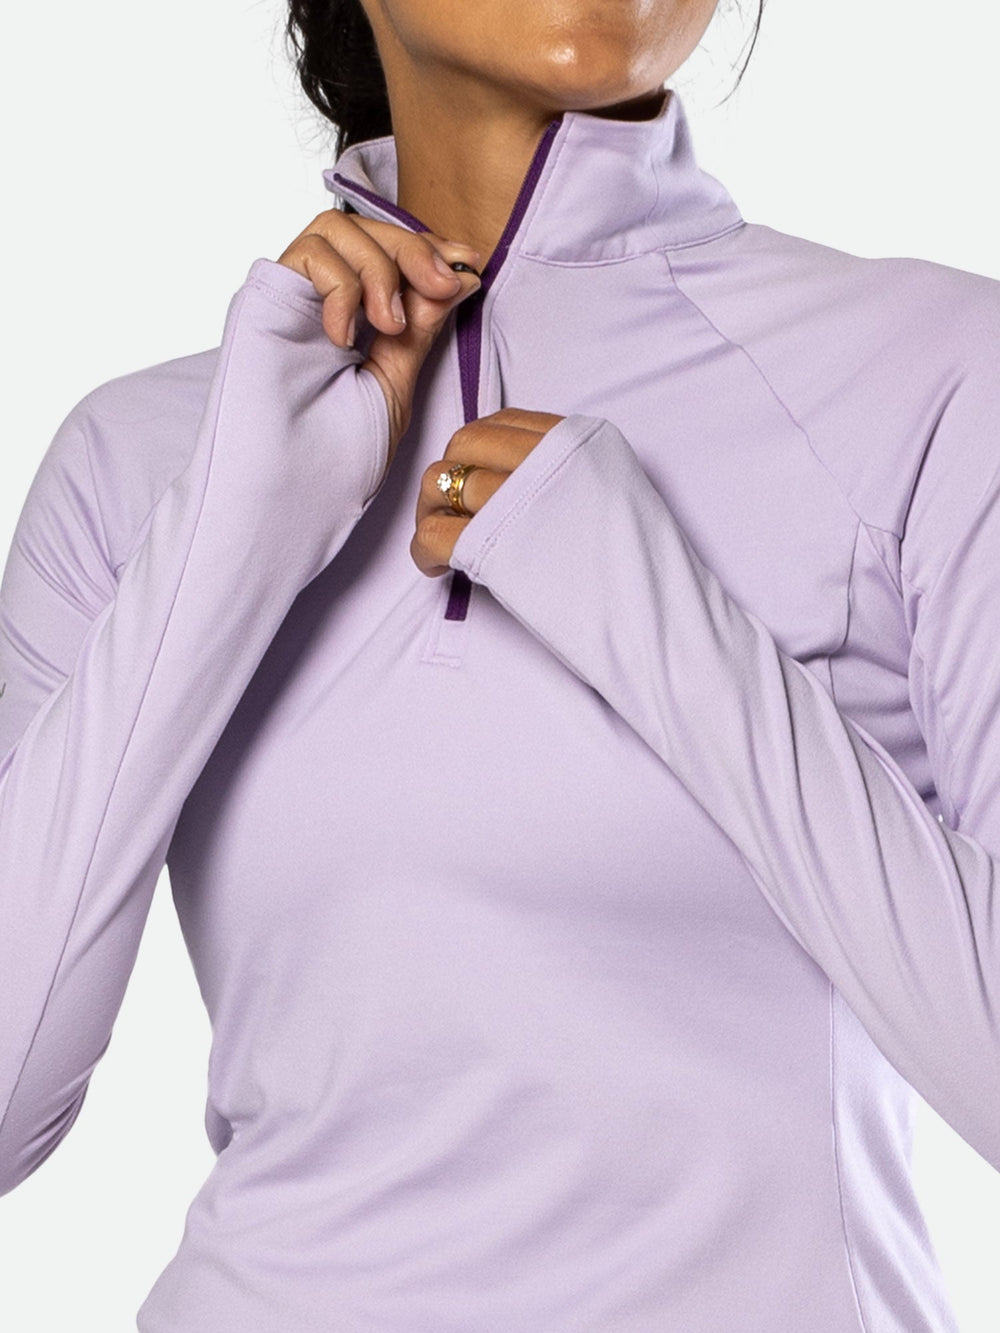 Women\'s Tempo Quarter Zip Long Sleeve Shirt 2.0 | Nathan Sports